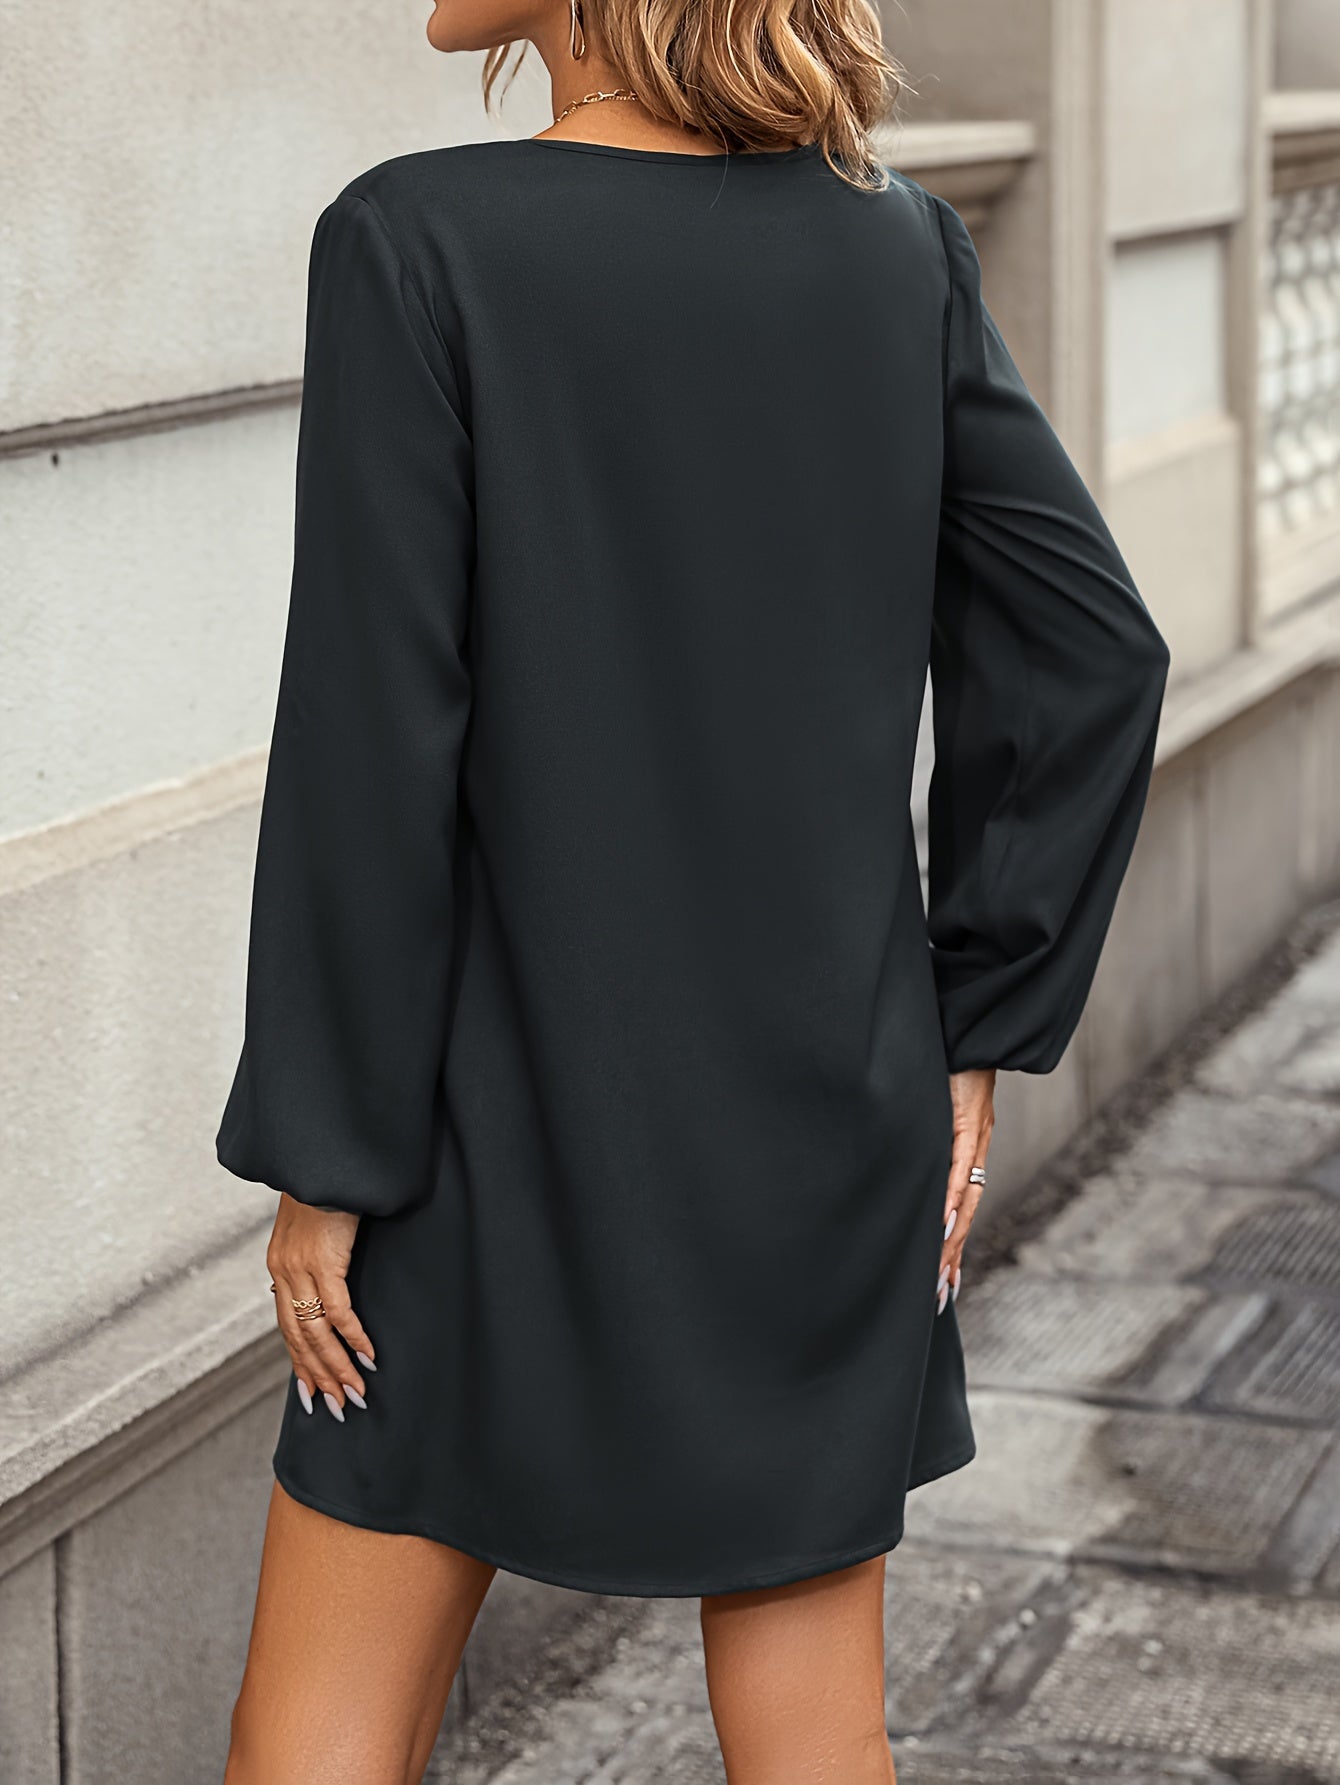 Antmvs Notched Neck Simple Dress, Elegant Lantern Long Sleeve Mini Dress, Women's Clothing